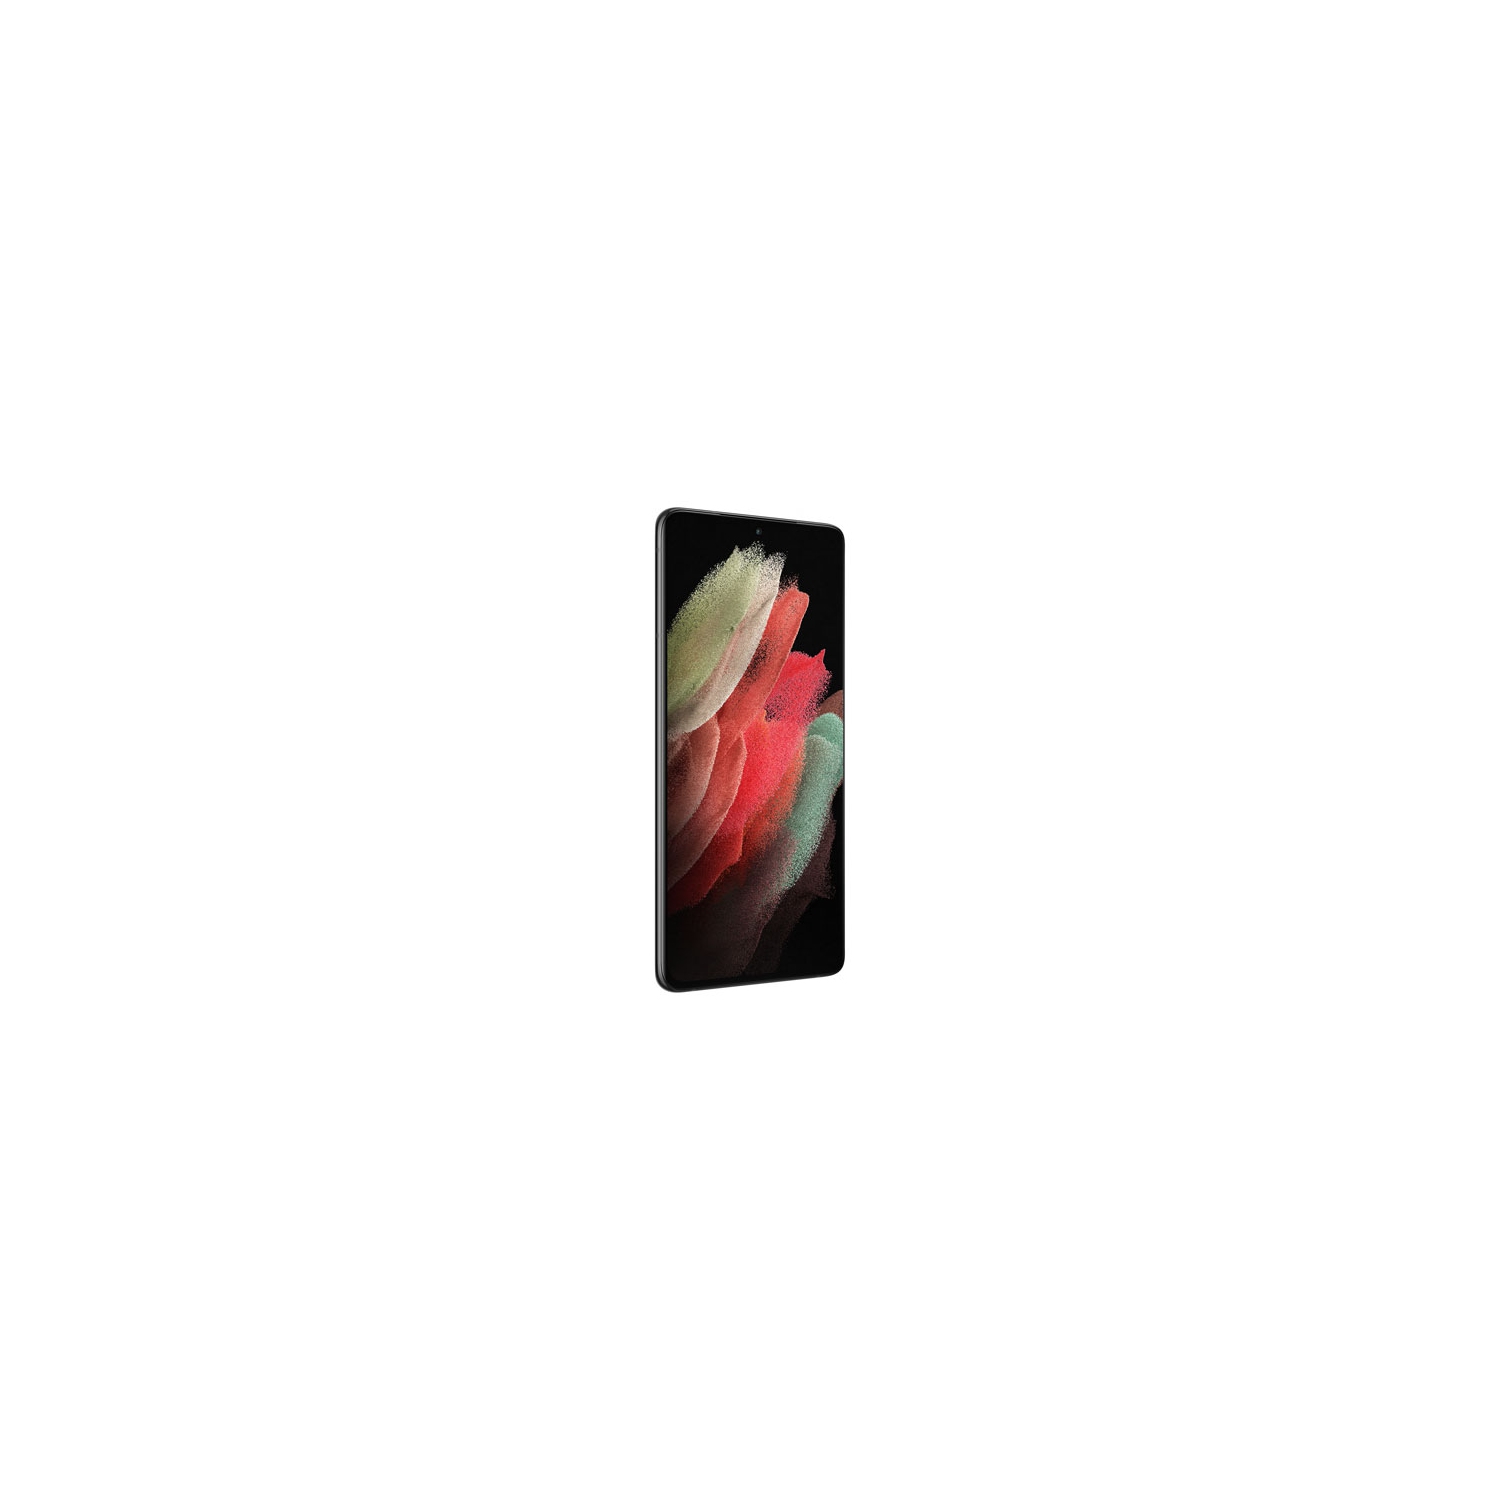 Refurbished (Good) - Samsung Galaxy S21 Ultra 5G 256GB Smartphone - Phantom Black - Unlocked